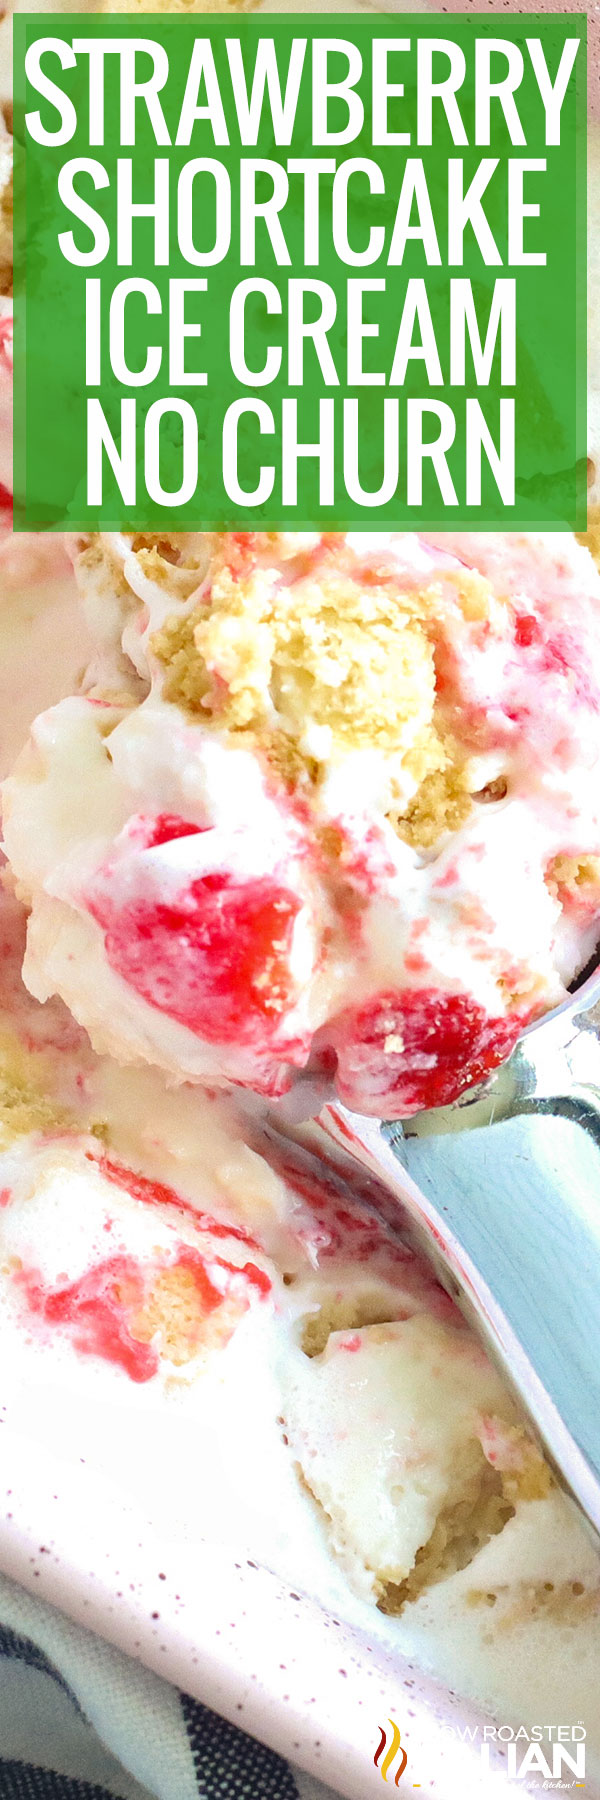 pinterest collage of strawberry shortcake ice cream